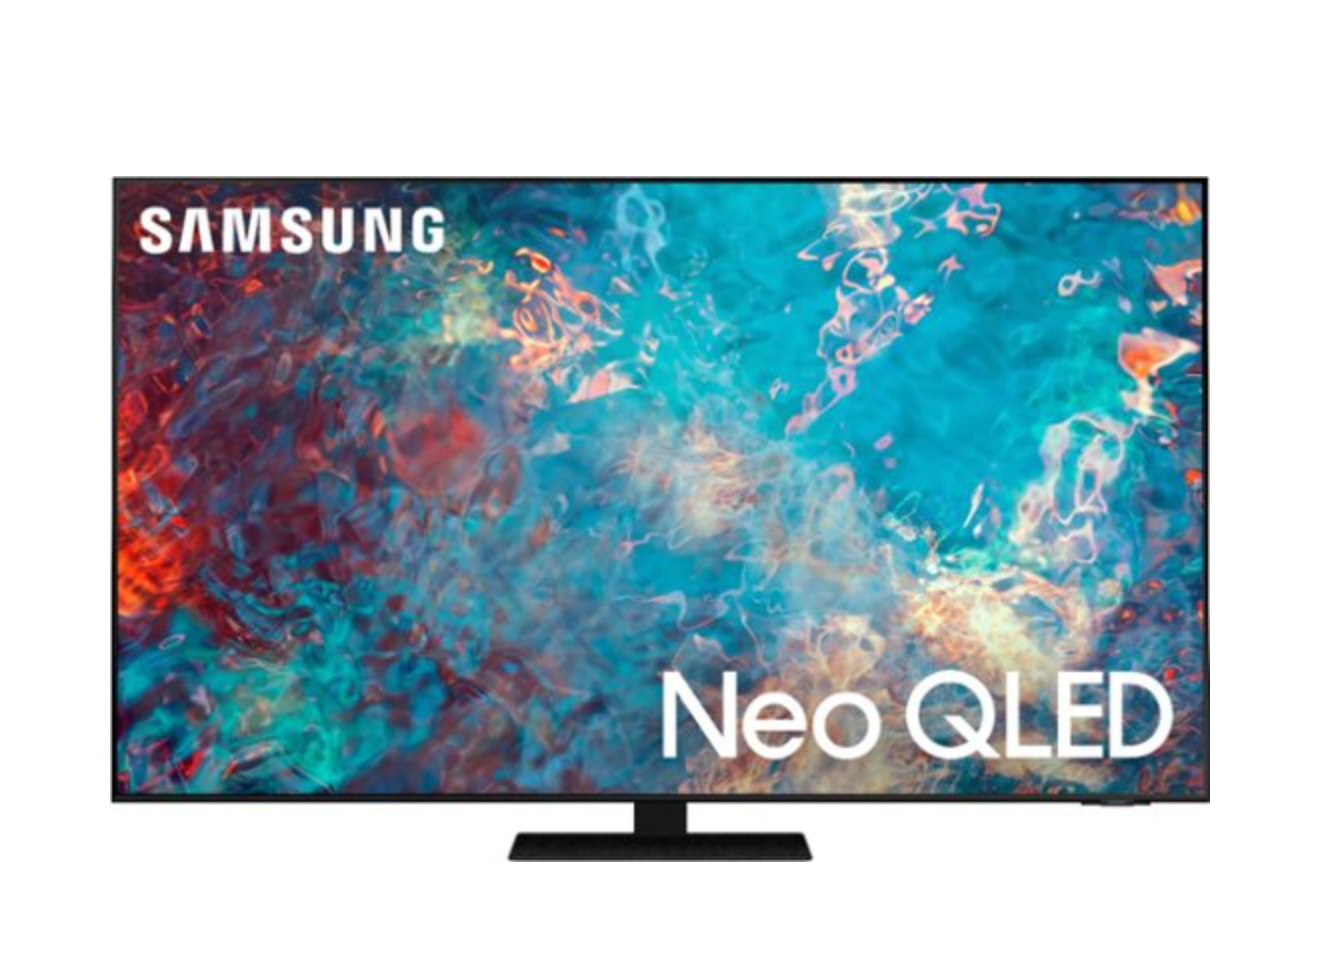 Samsung Neo QLED 4K UHD Smart Tizen TV